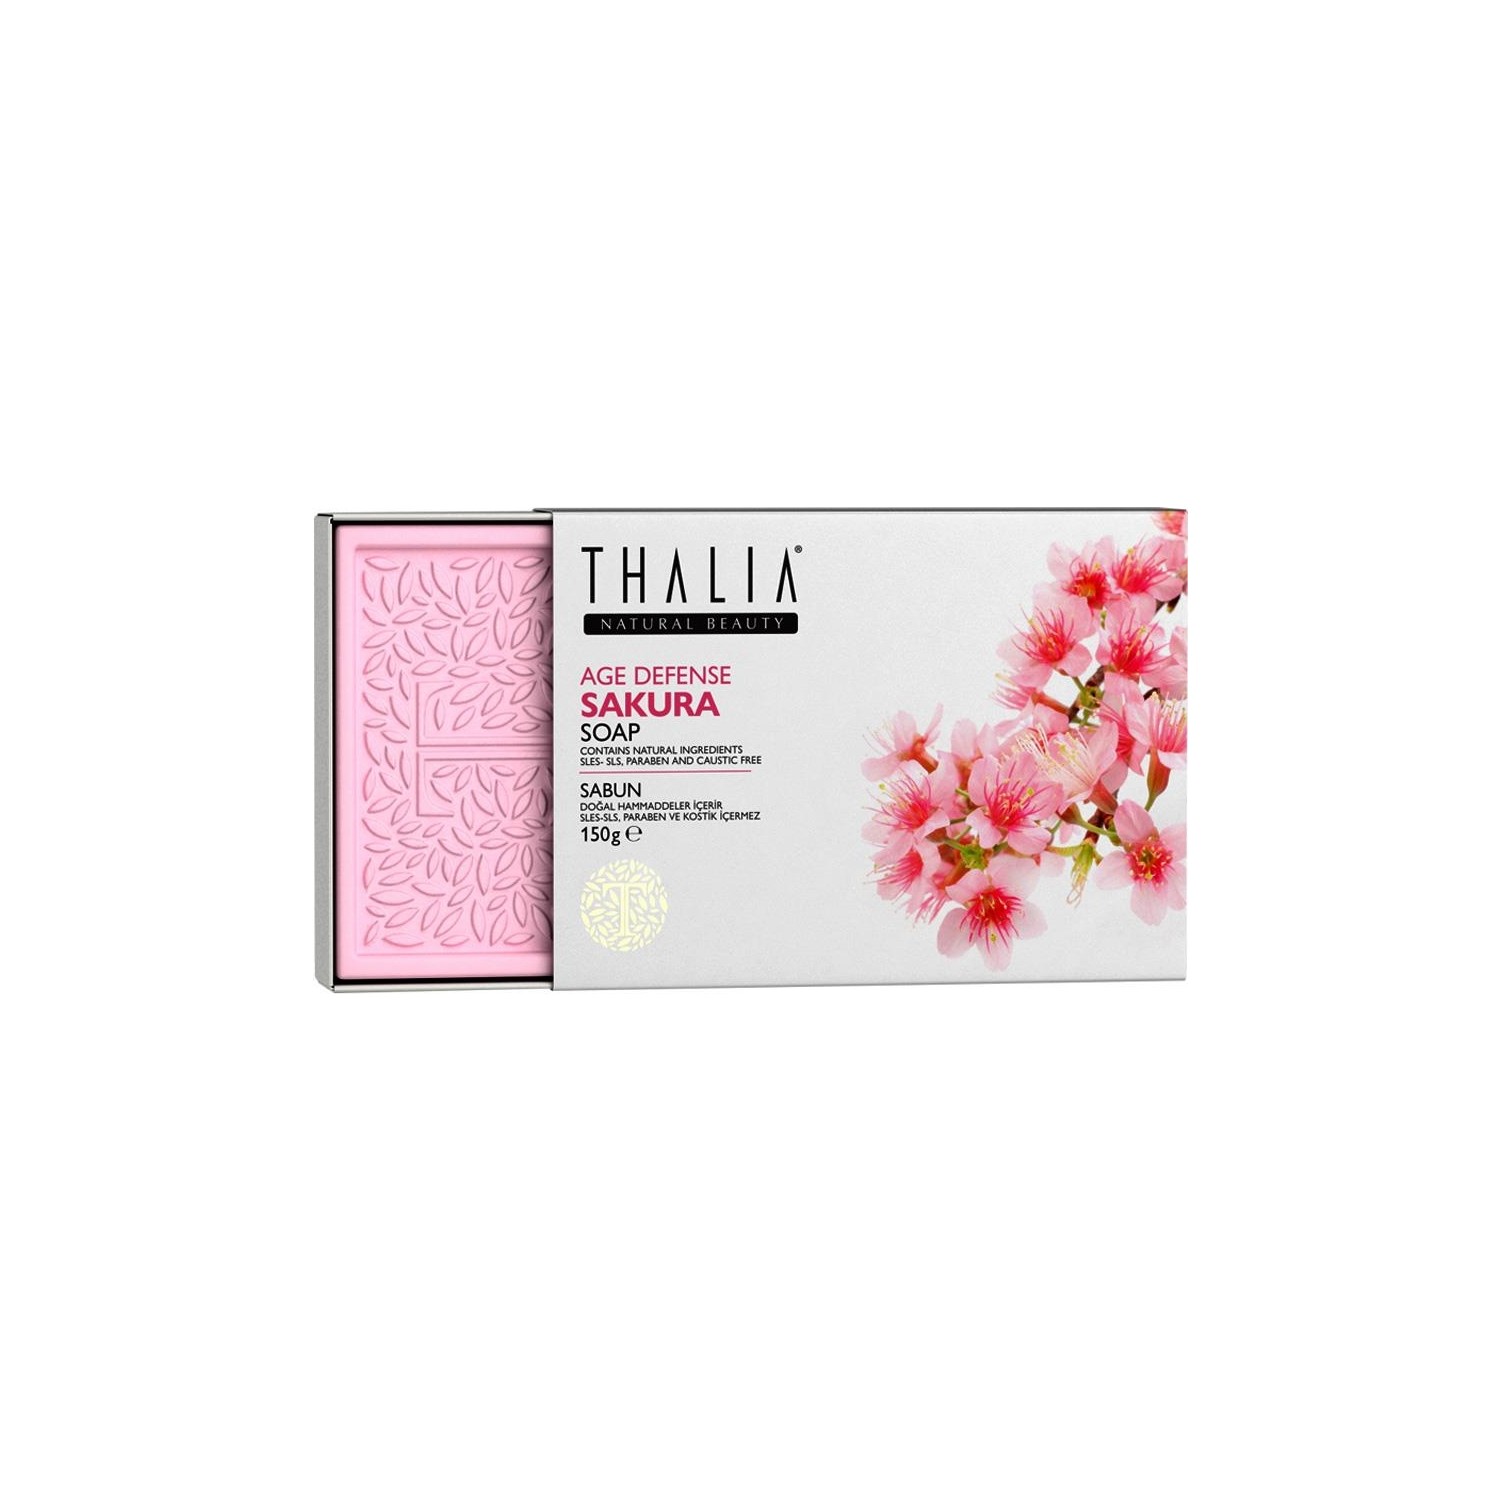 Натуральное мыло Thalia с экстрактом сакуры антивозрастное мыло с ароматом сакуры thalia natural beauty age defense sakura soap